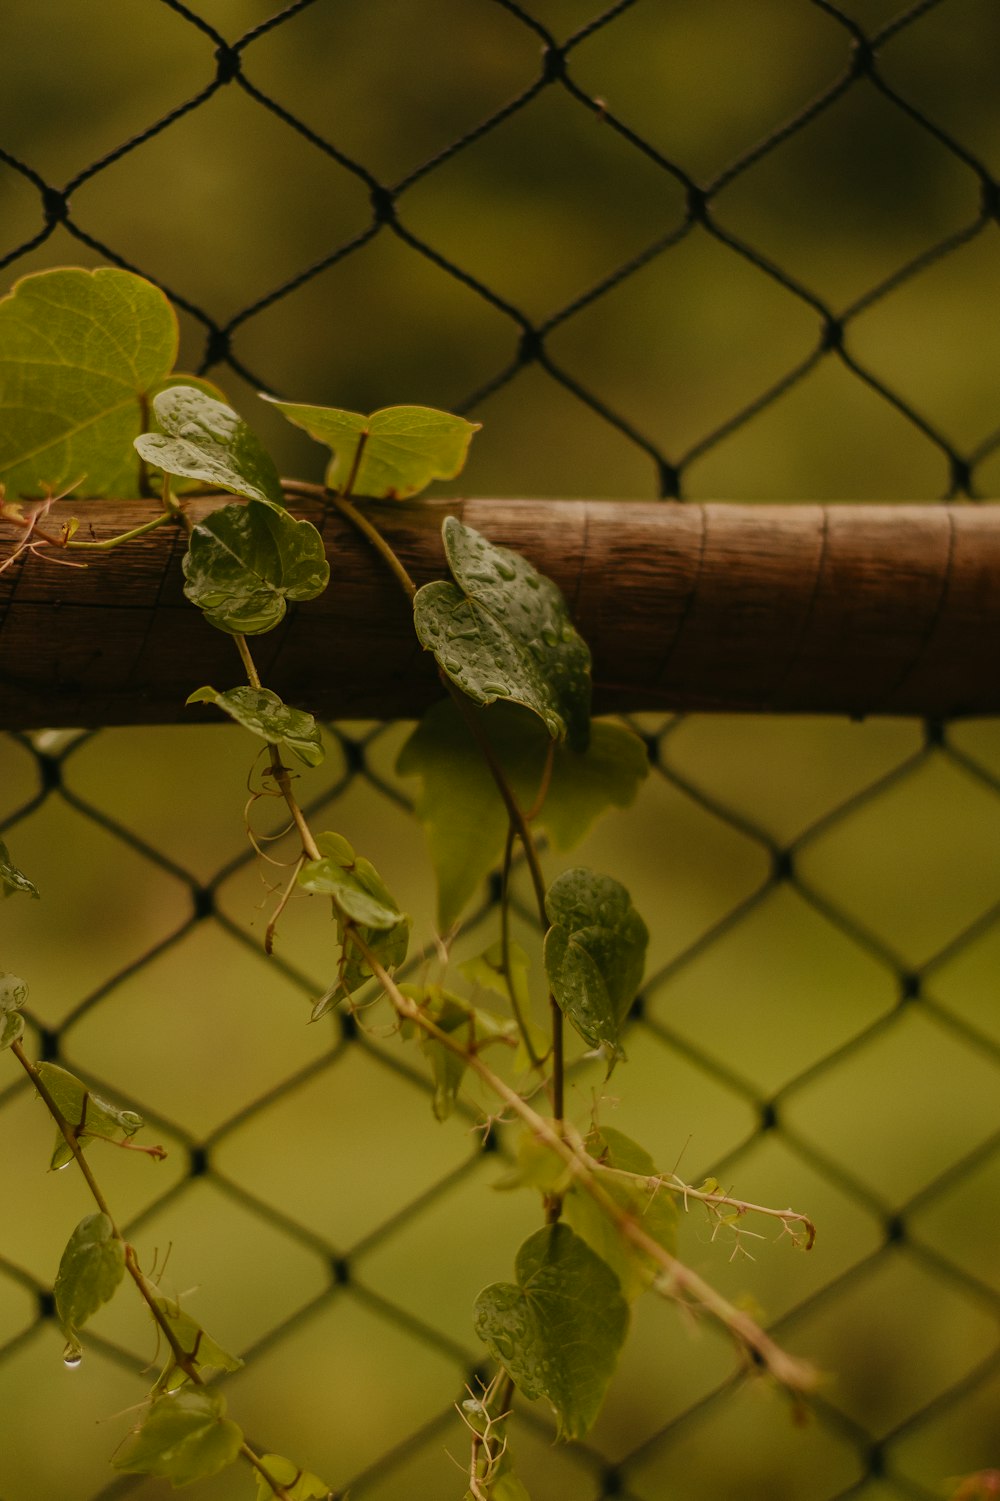 a close up of a vine on a fence